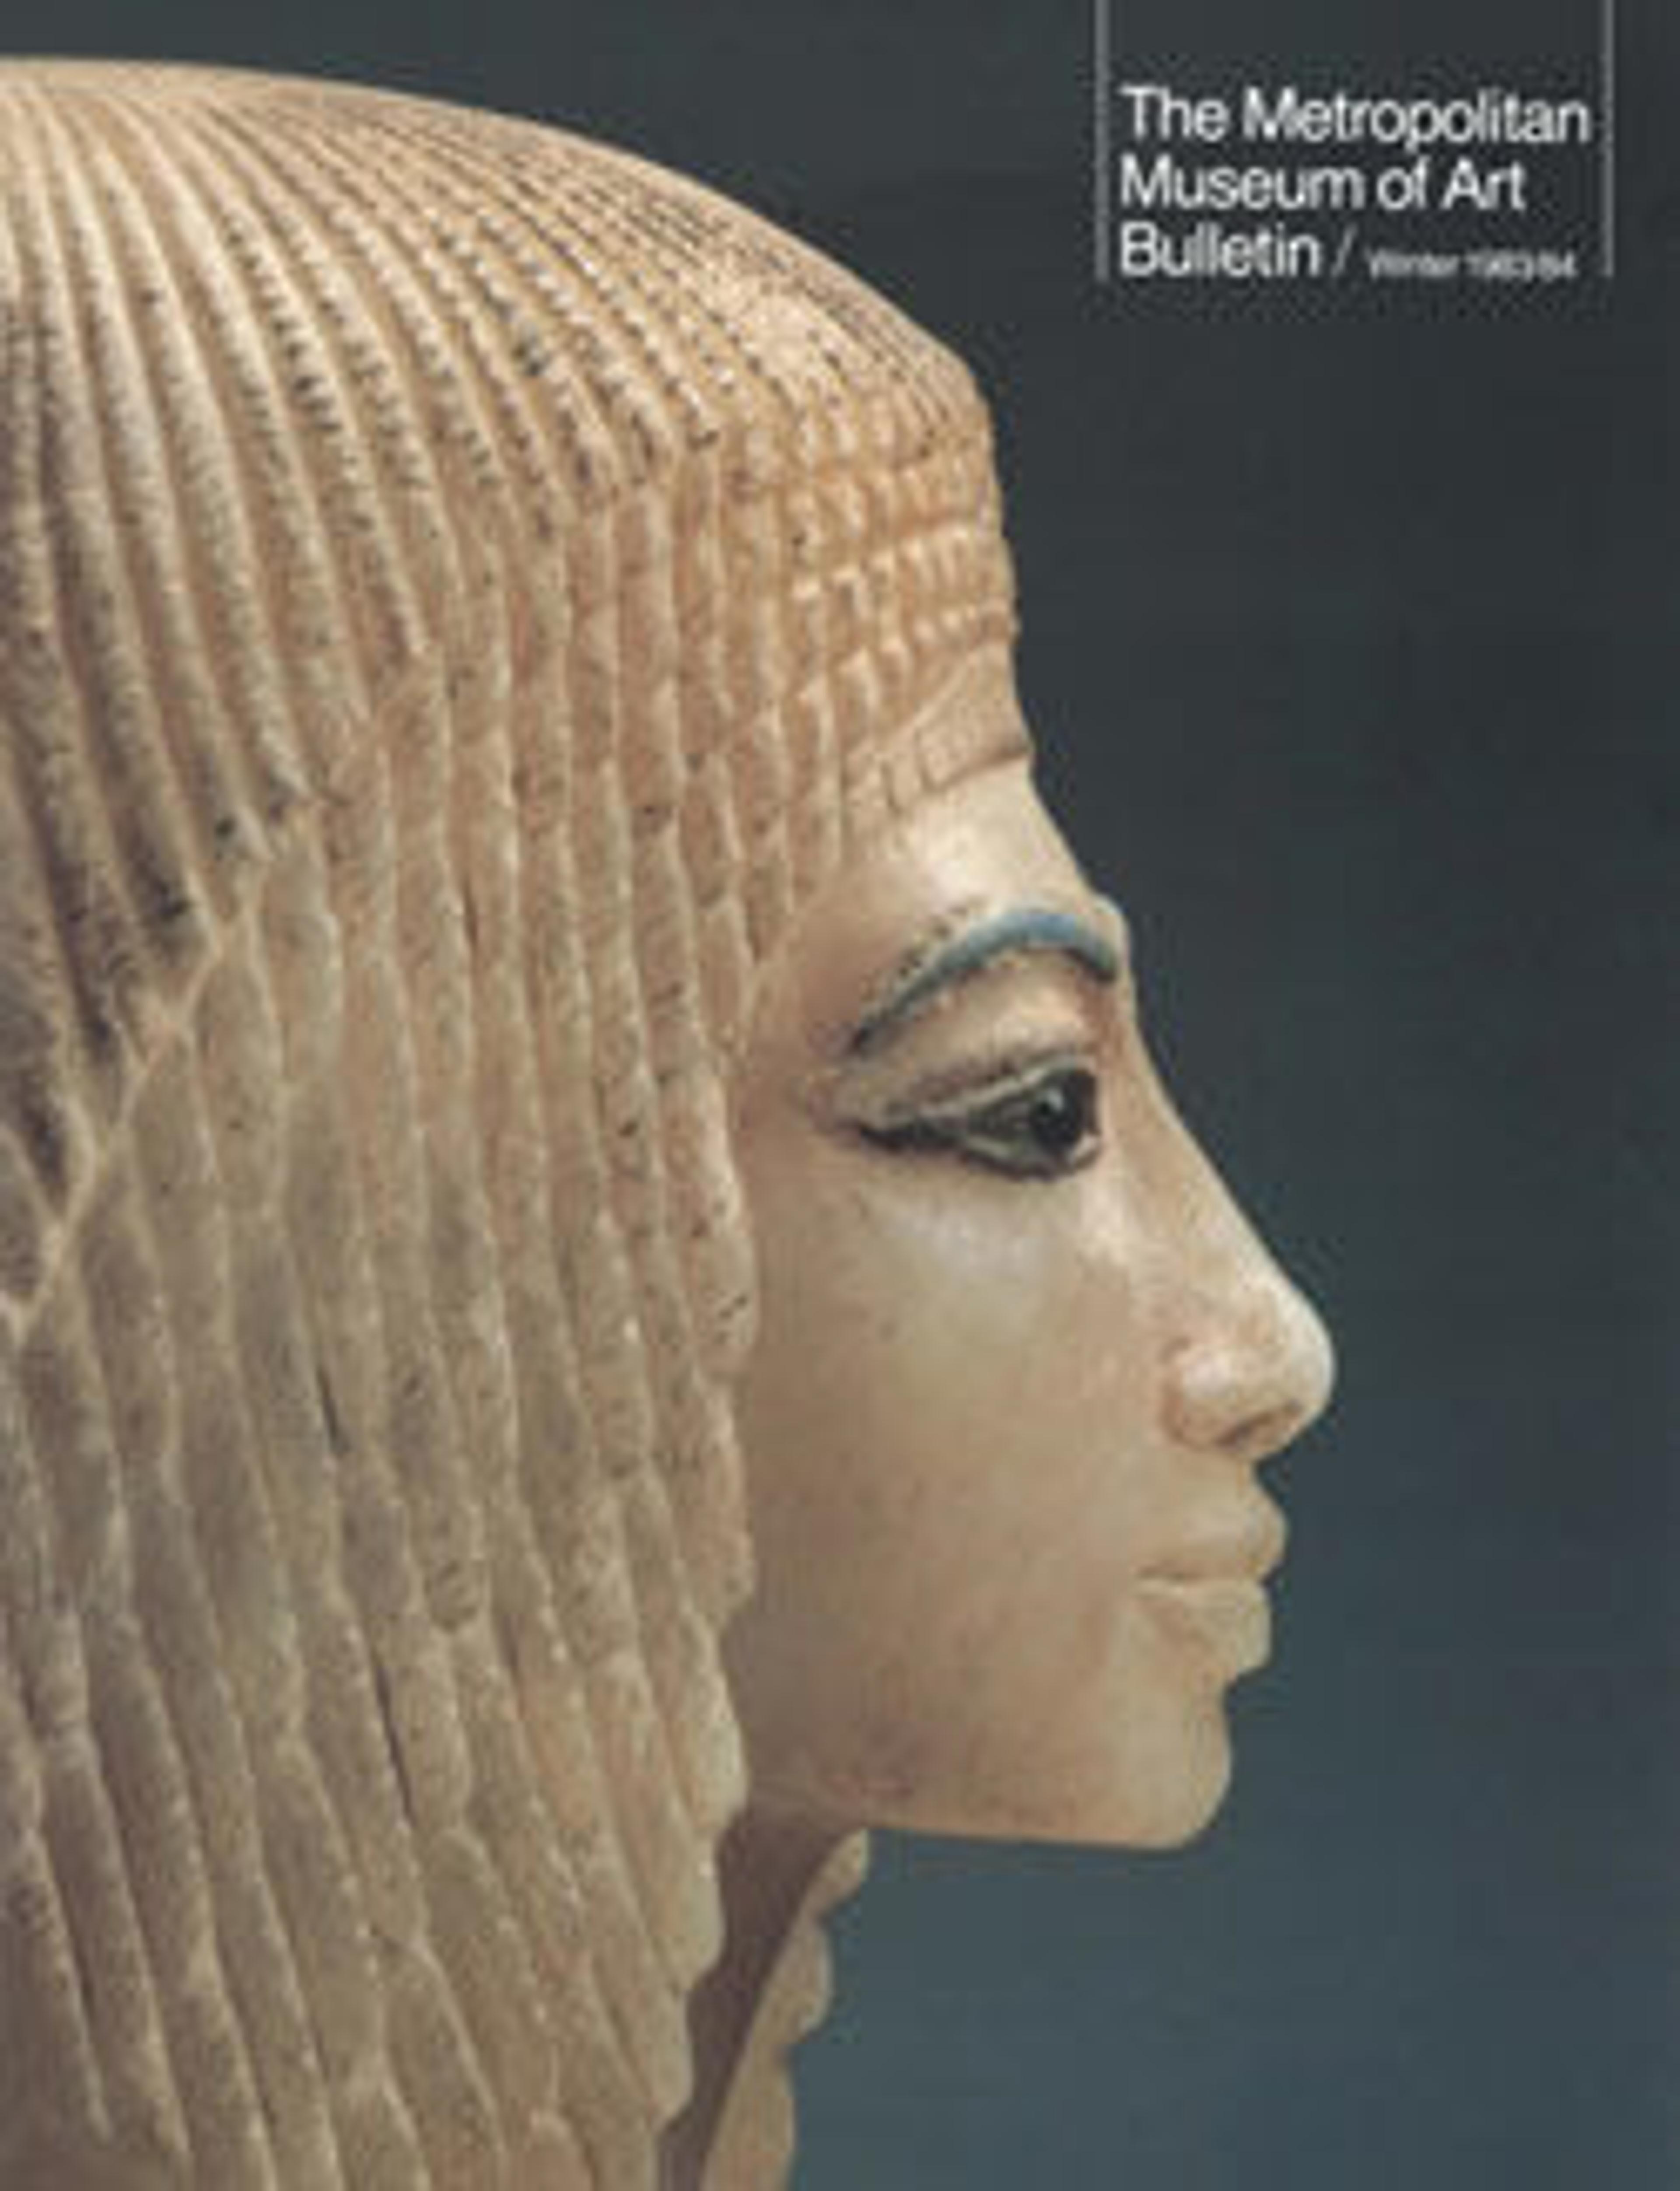 "Egyptian Art": The Metropolitan Museum of Art Bulletin, v. 41, no. 3 (Winter, 1983-1984)